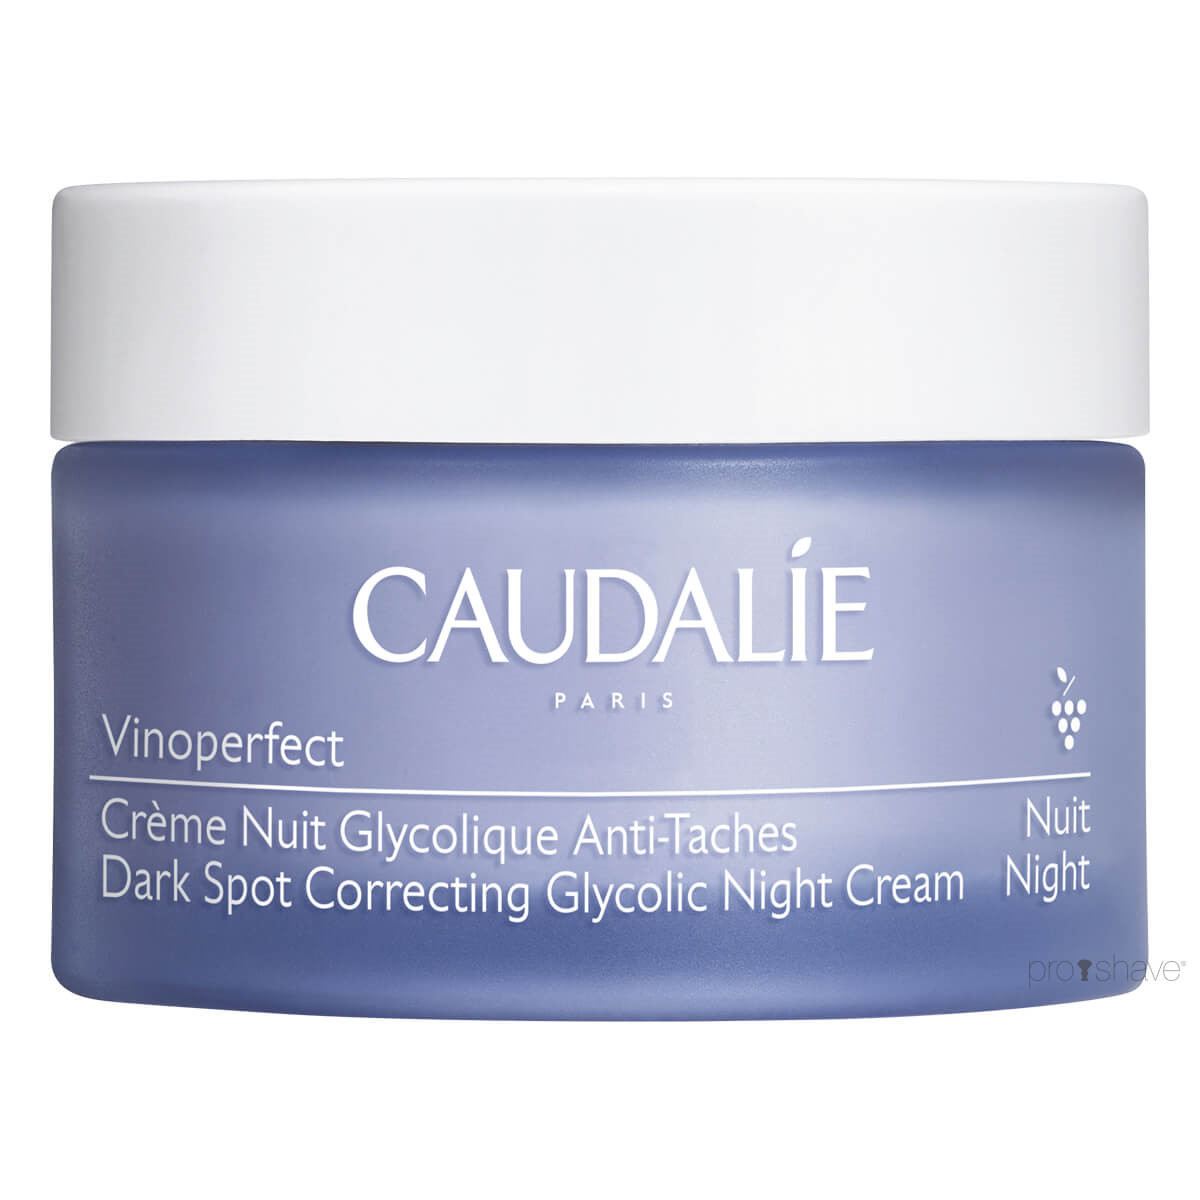 12: Caudalie Vinoperfect, Glycolic Night Cream, 50 ml.